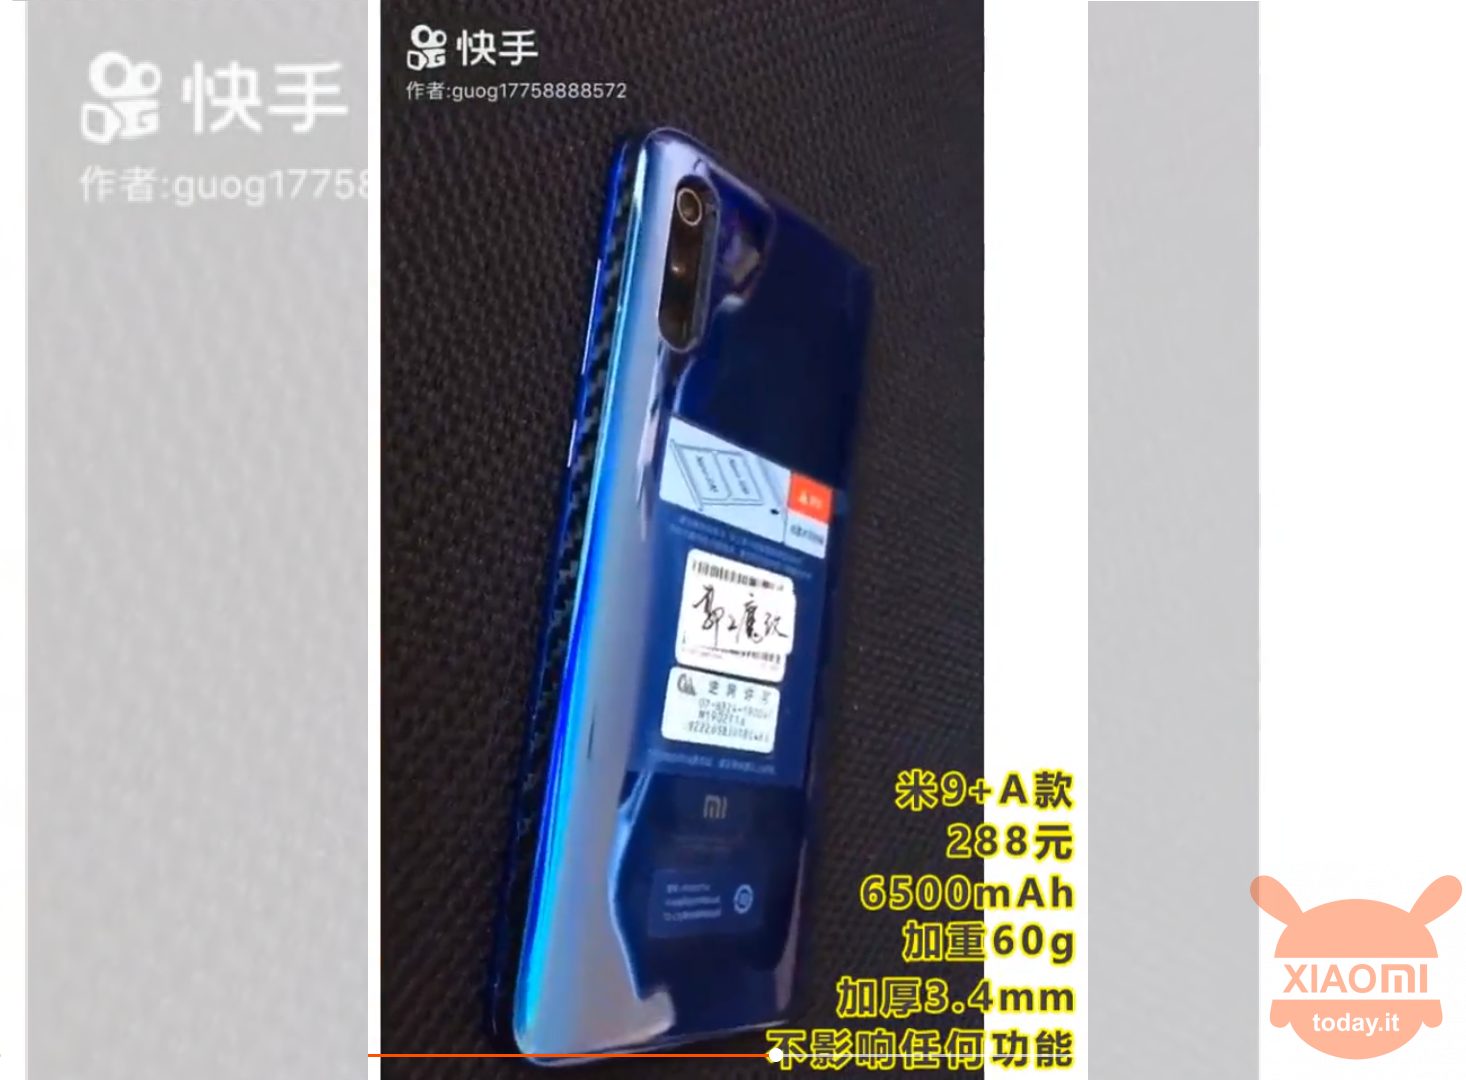 Xiaomi Mi 9 6500mAh batterie